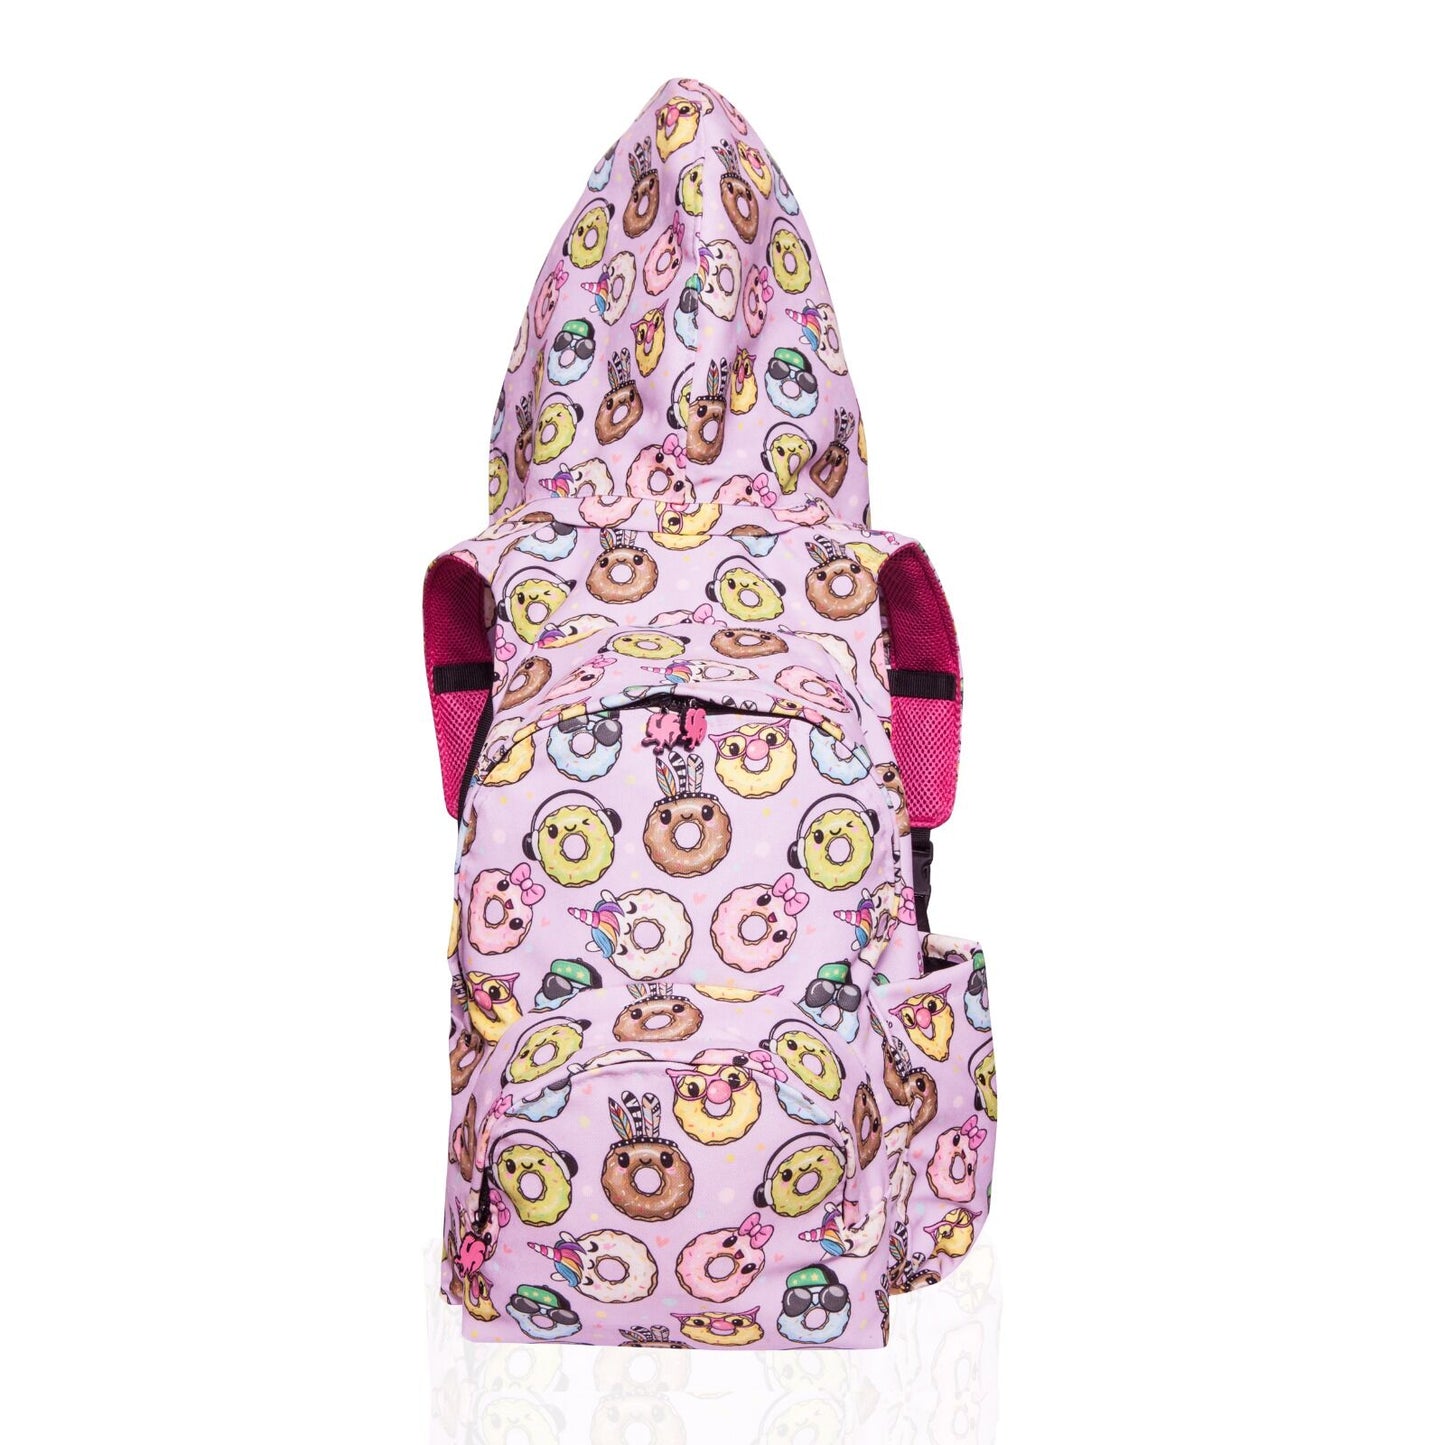 Morikukko Back To School Donut Hooded Backpack